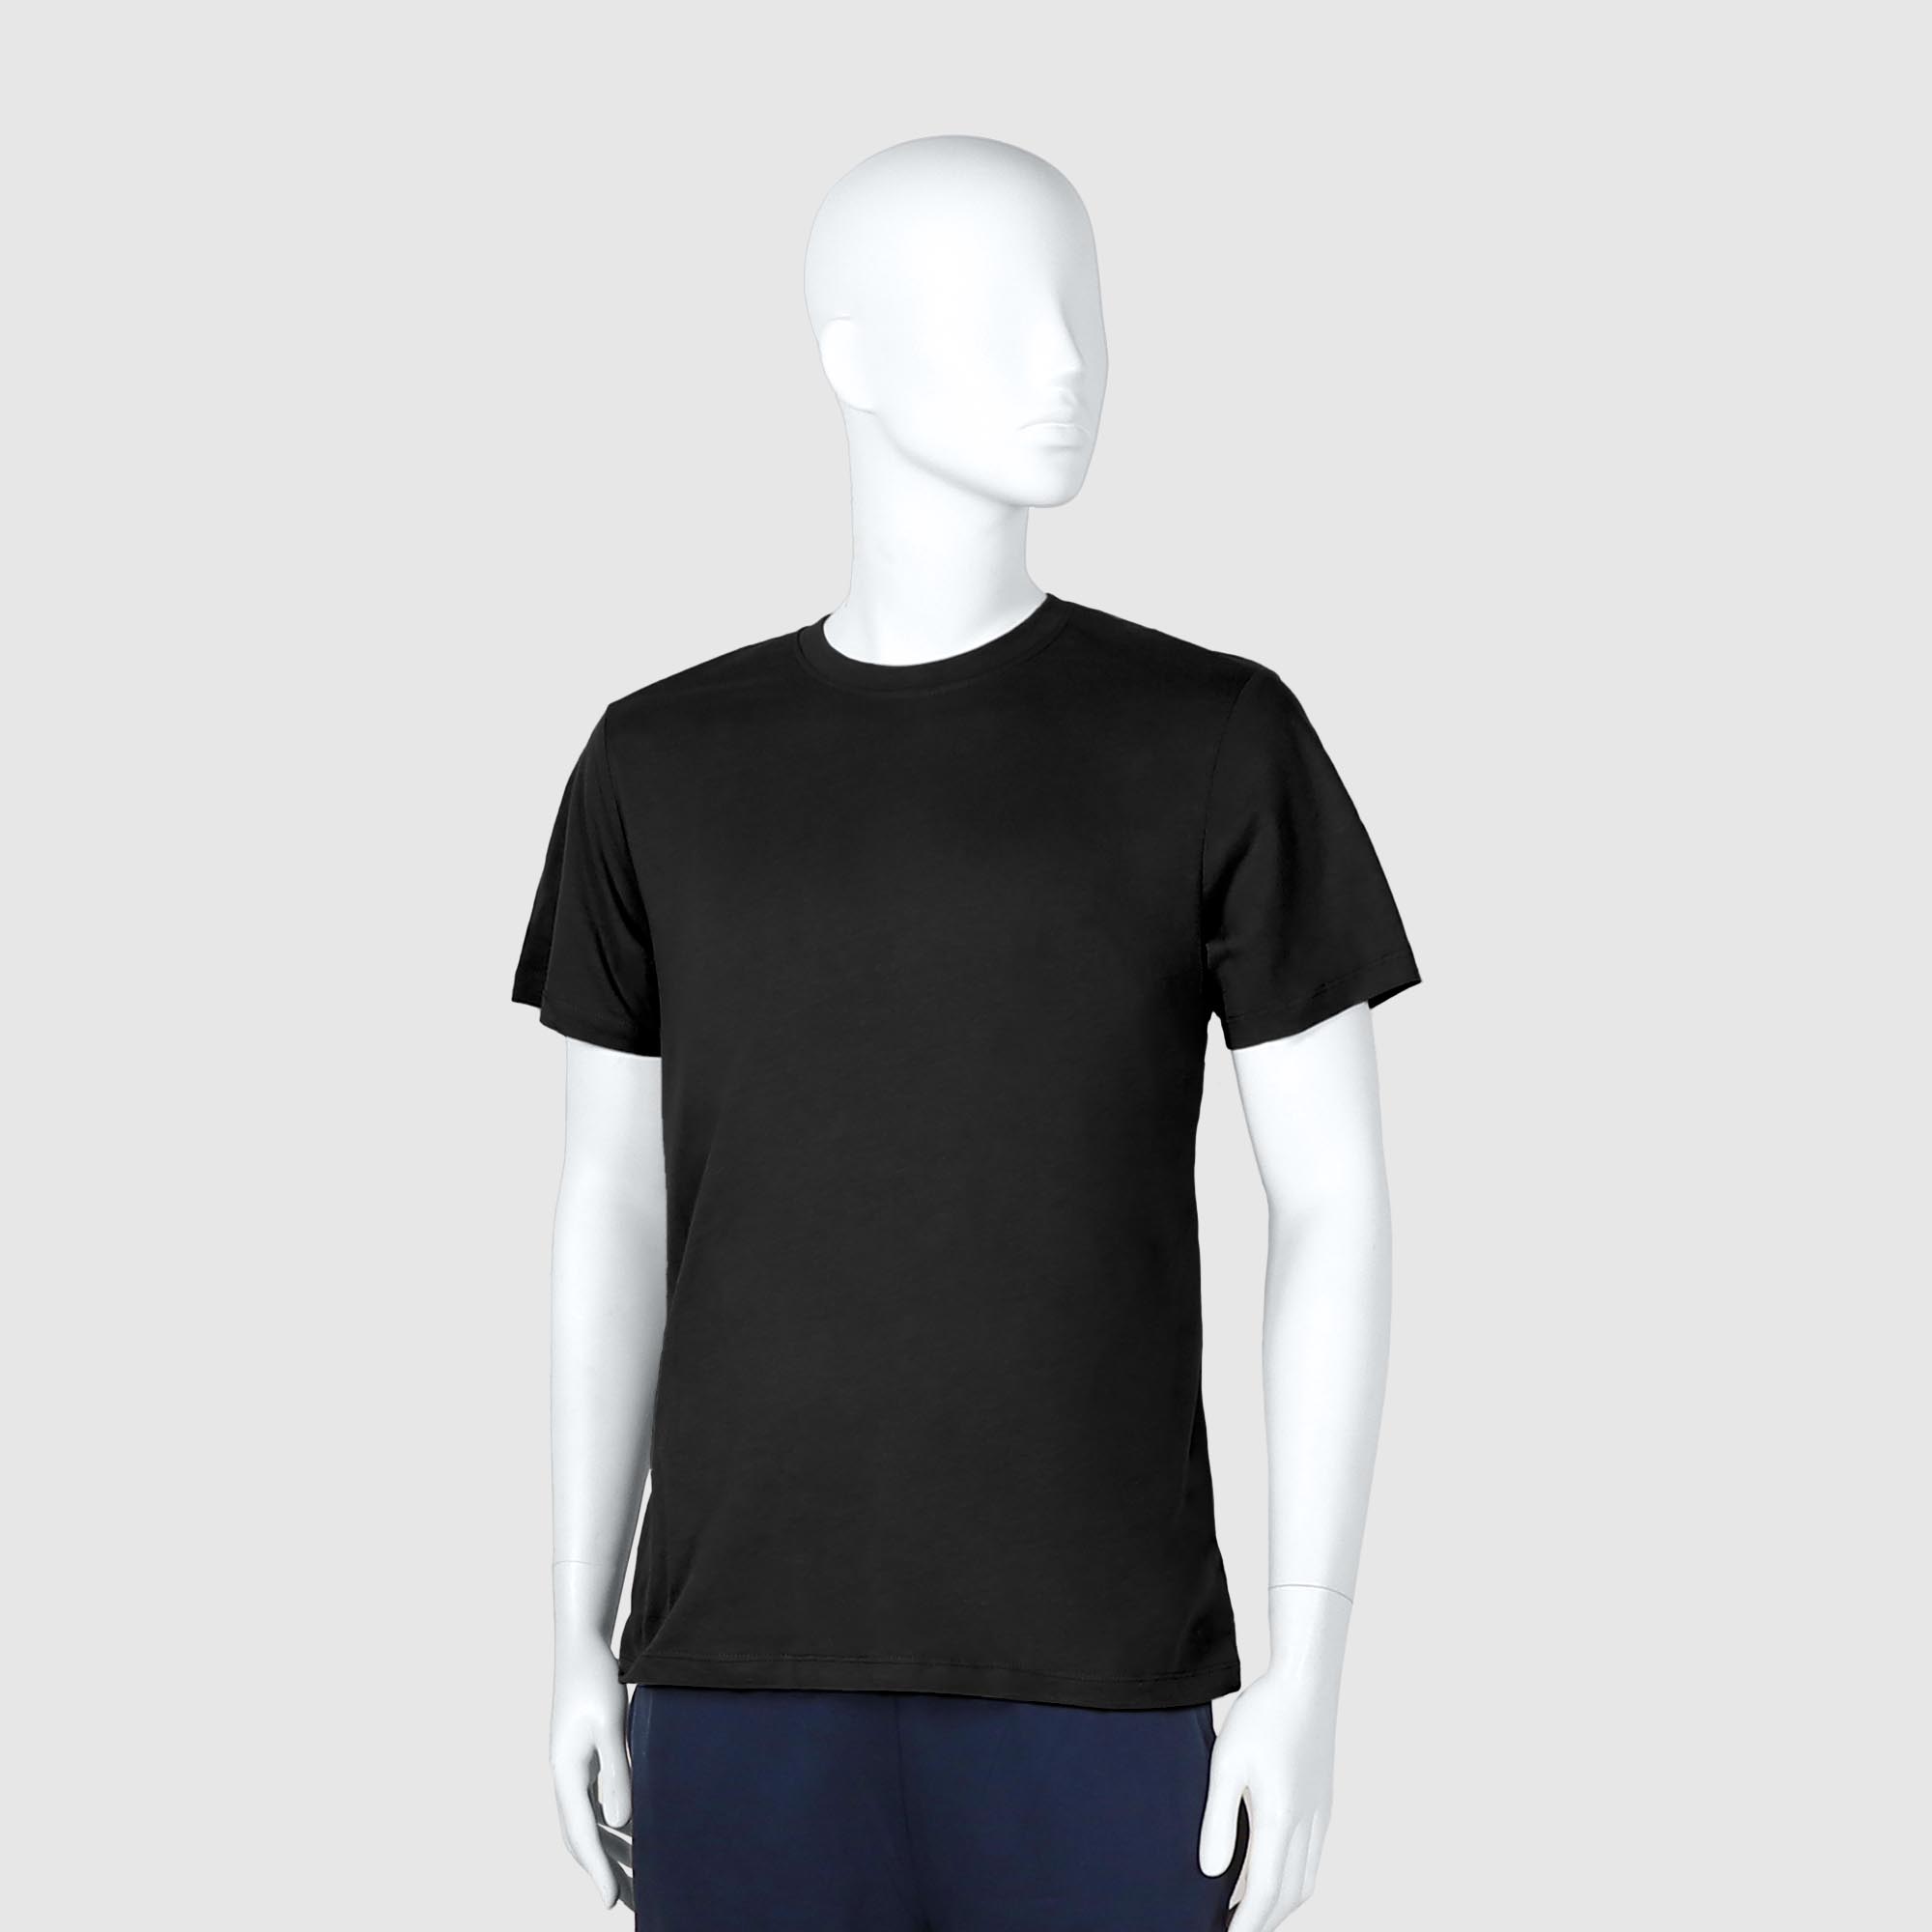 Мужская футболка Diva Teks чёрная (DTD-01), цвет чёрный, размер 46-48